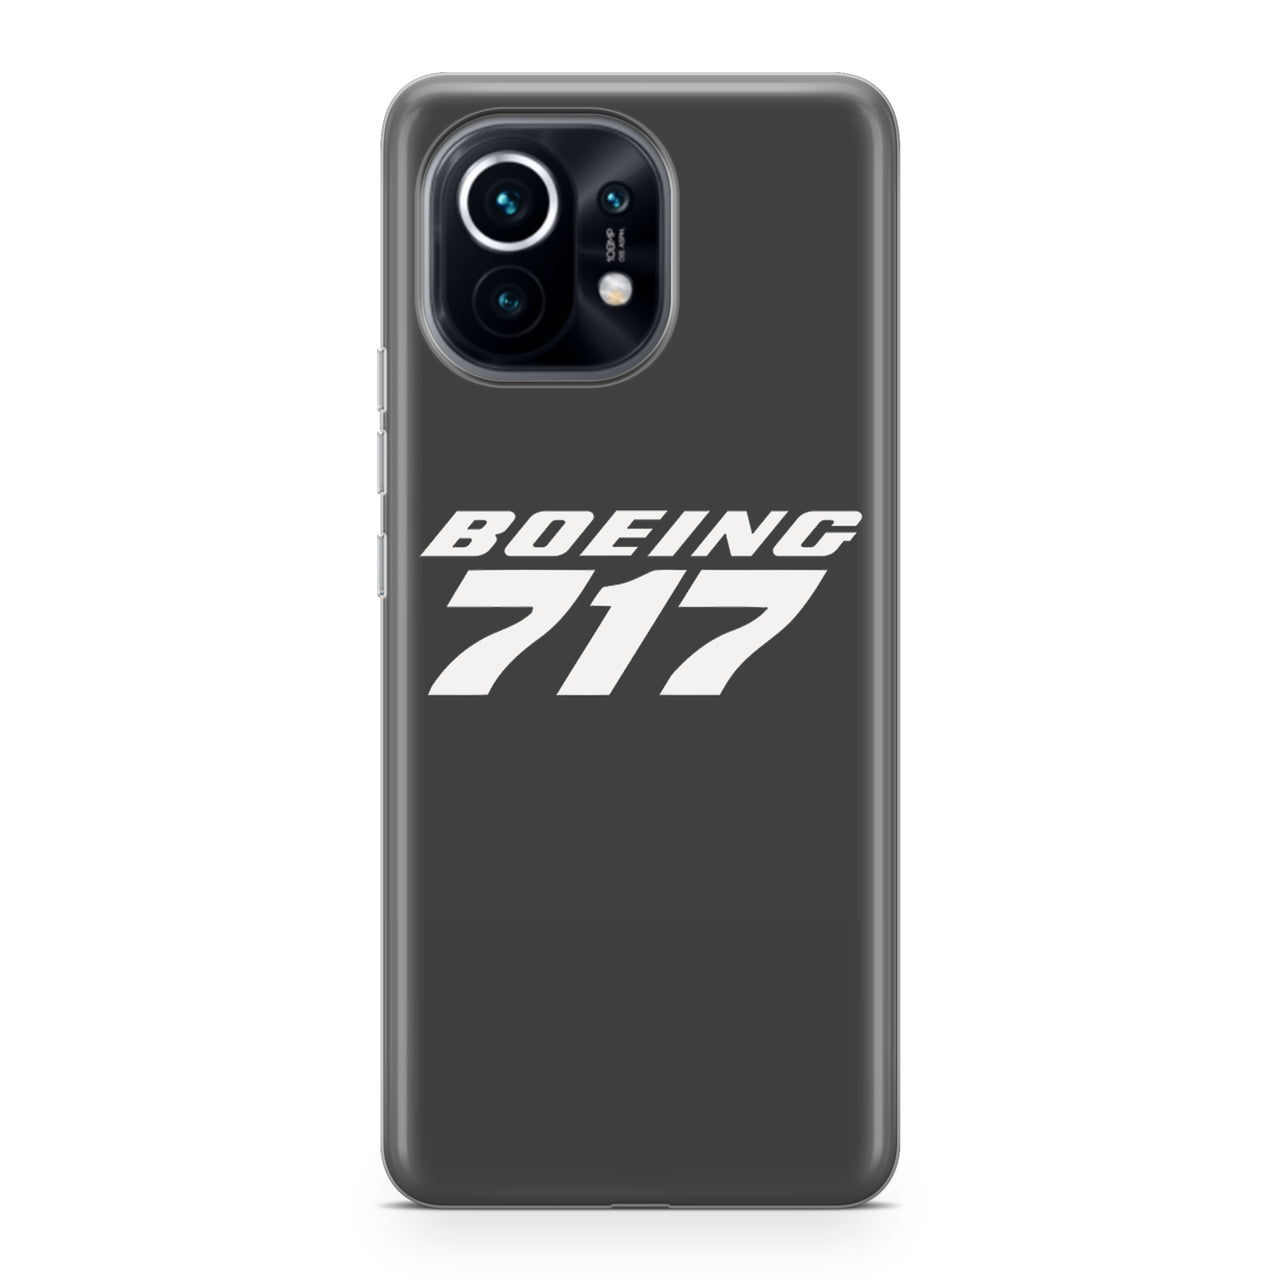 Boeing 717 & Text Designed Xiaomi Cases